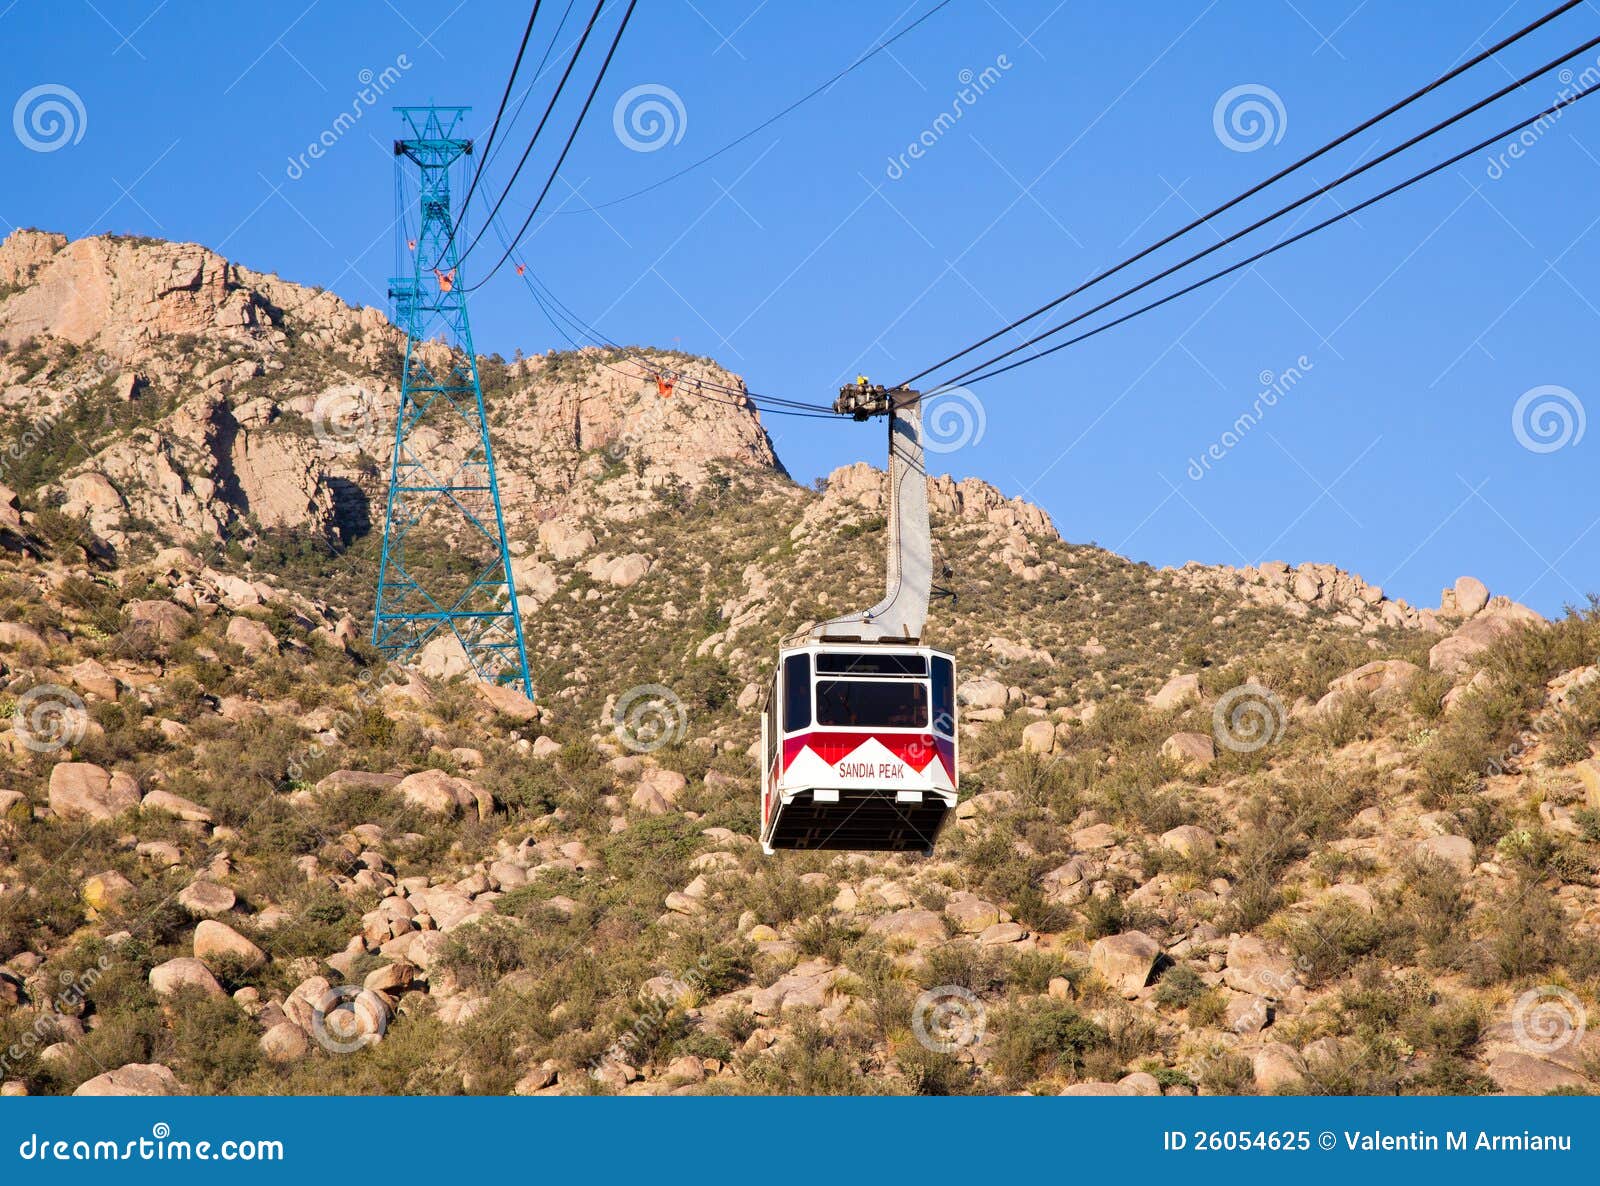 sandia peak tramway